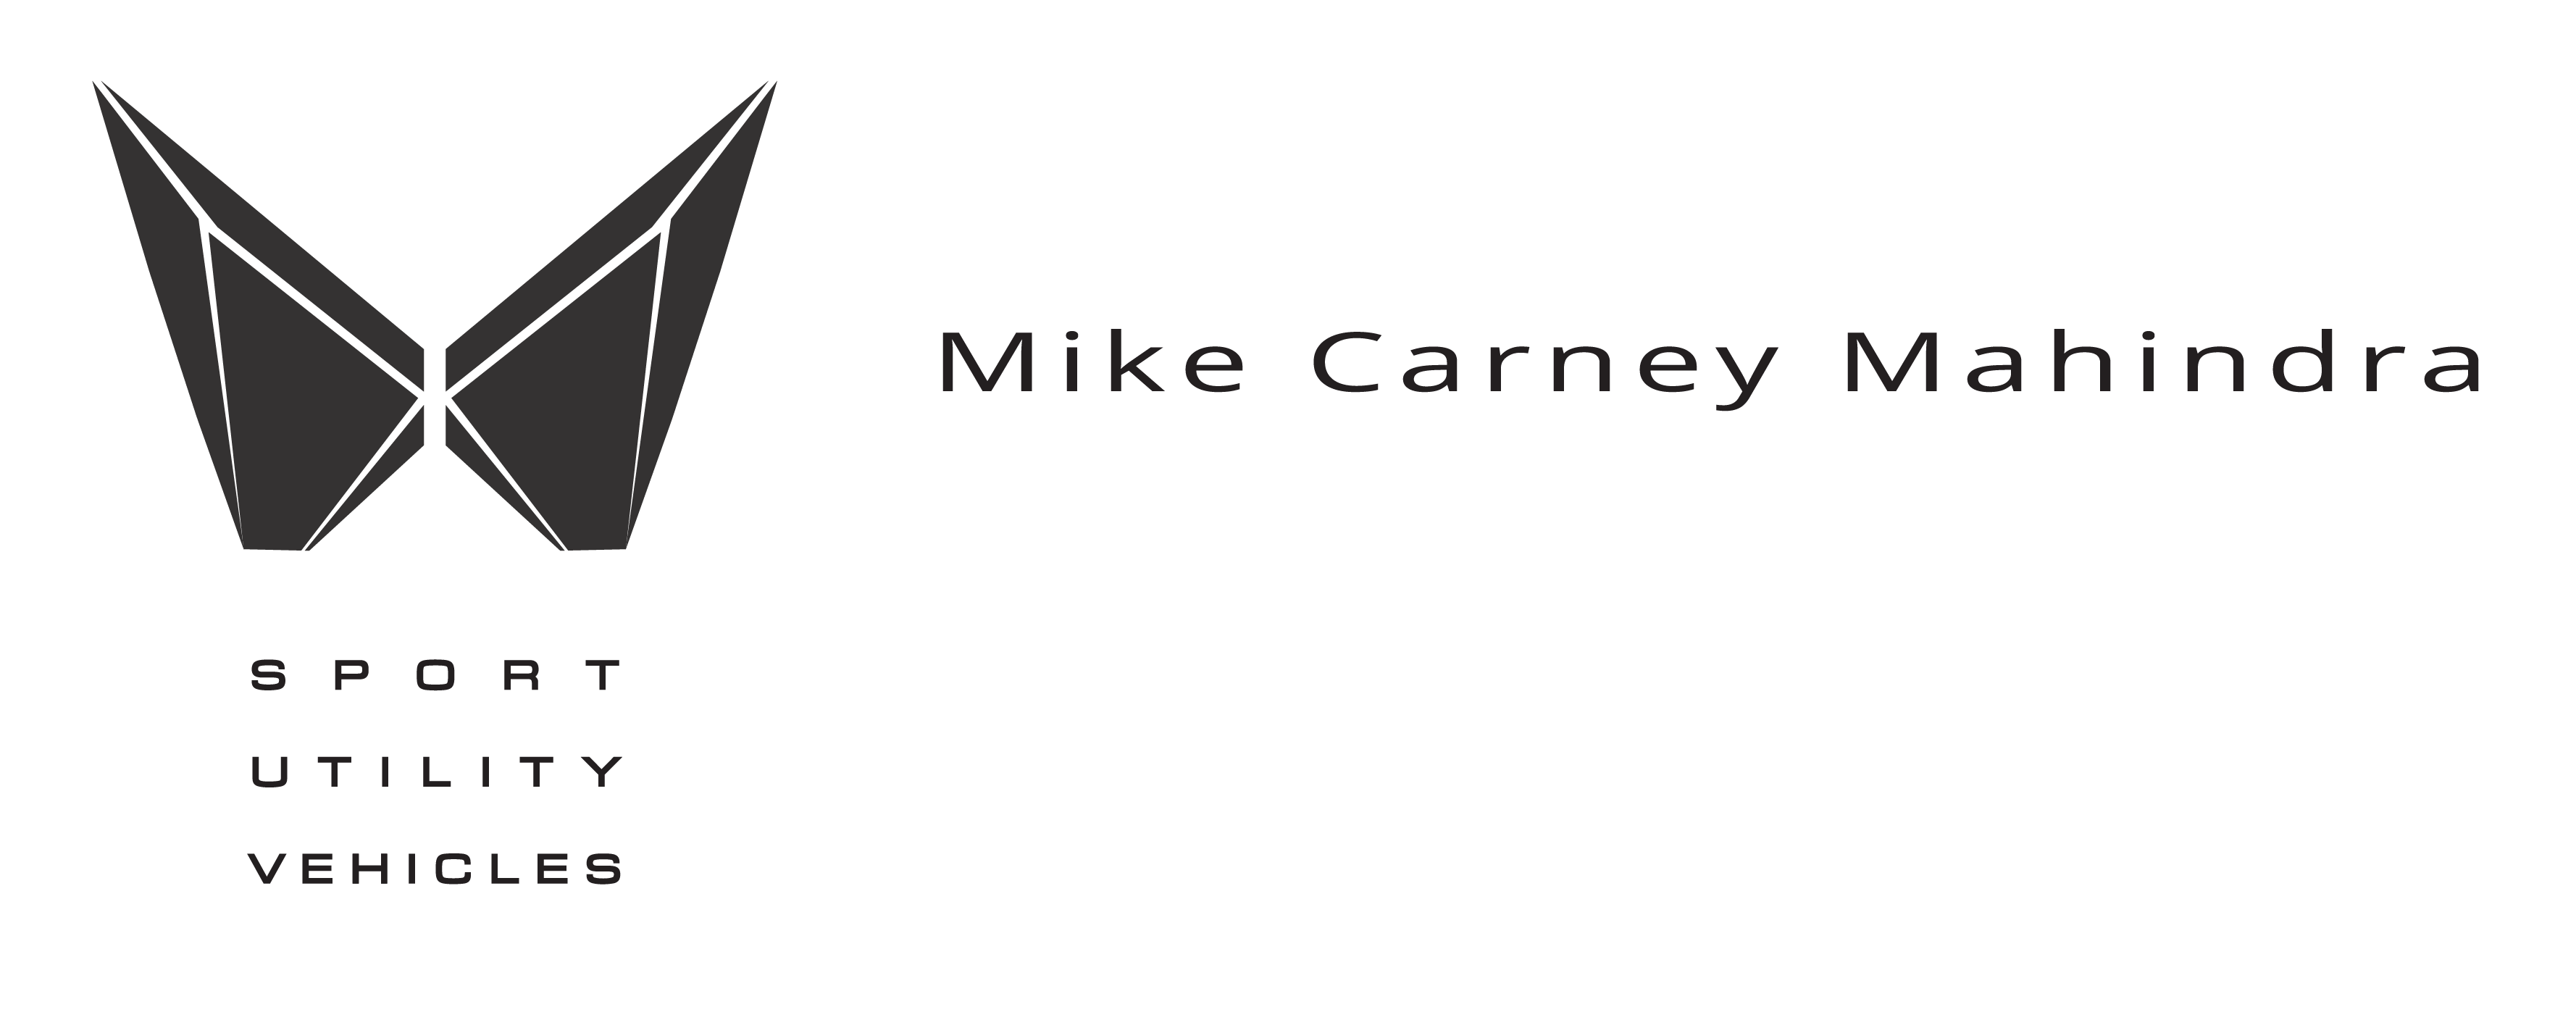 Mahindra Mike Carney logo B+W-01 (1)